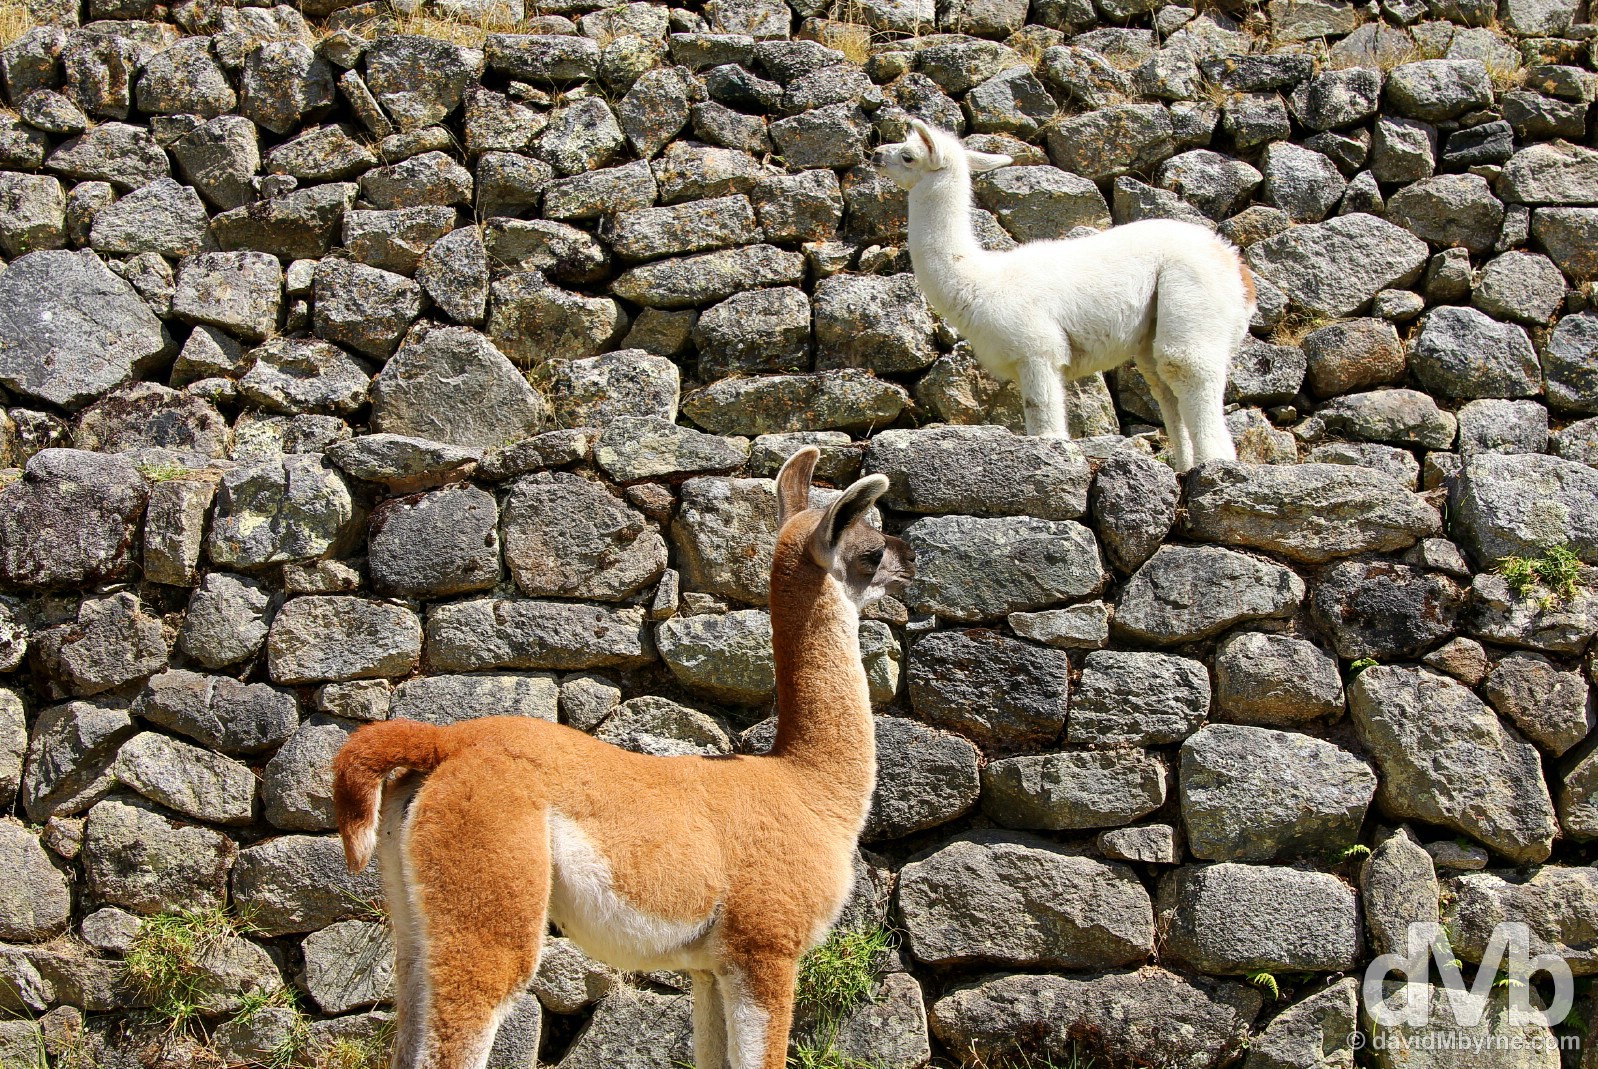 Baby llamas on the terraces of Machu Picchu, Peru. August 15, 2015. 